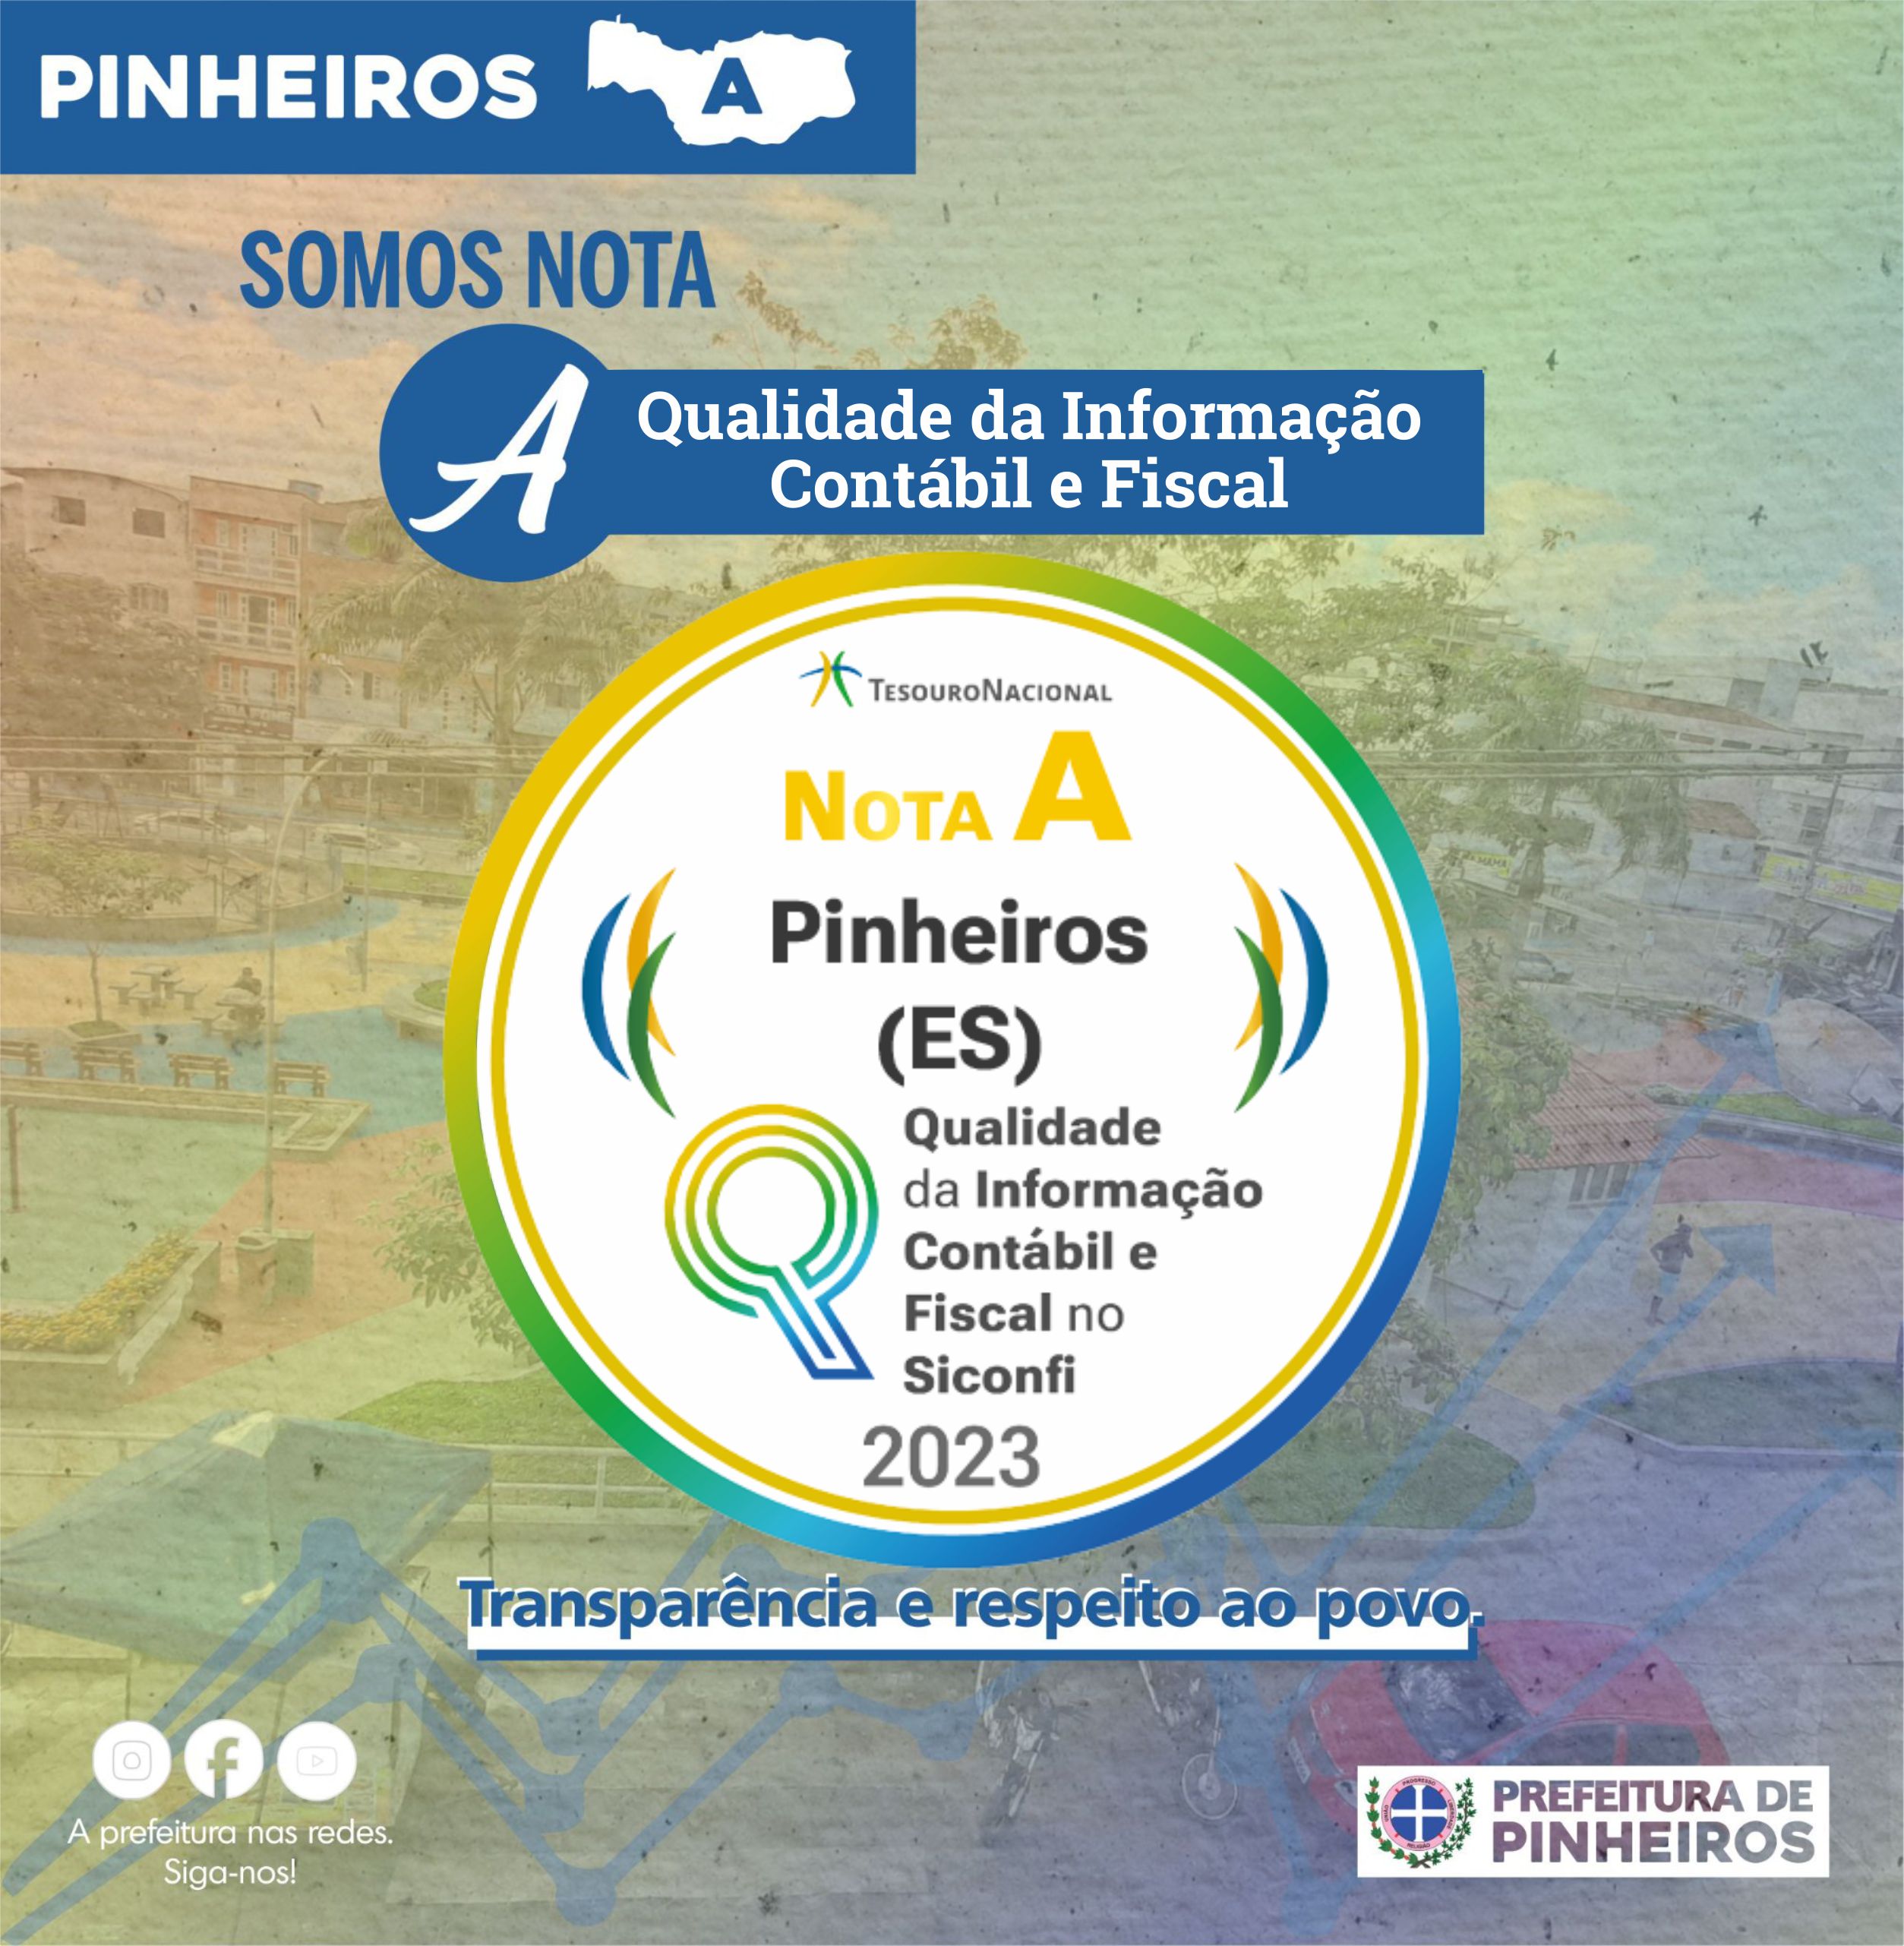 PINHEIROS RECEBE NOTA 